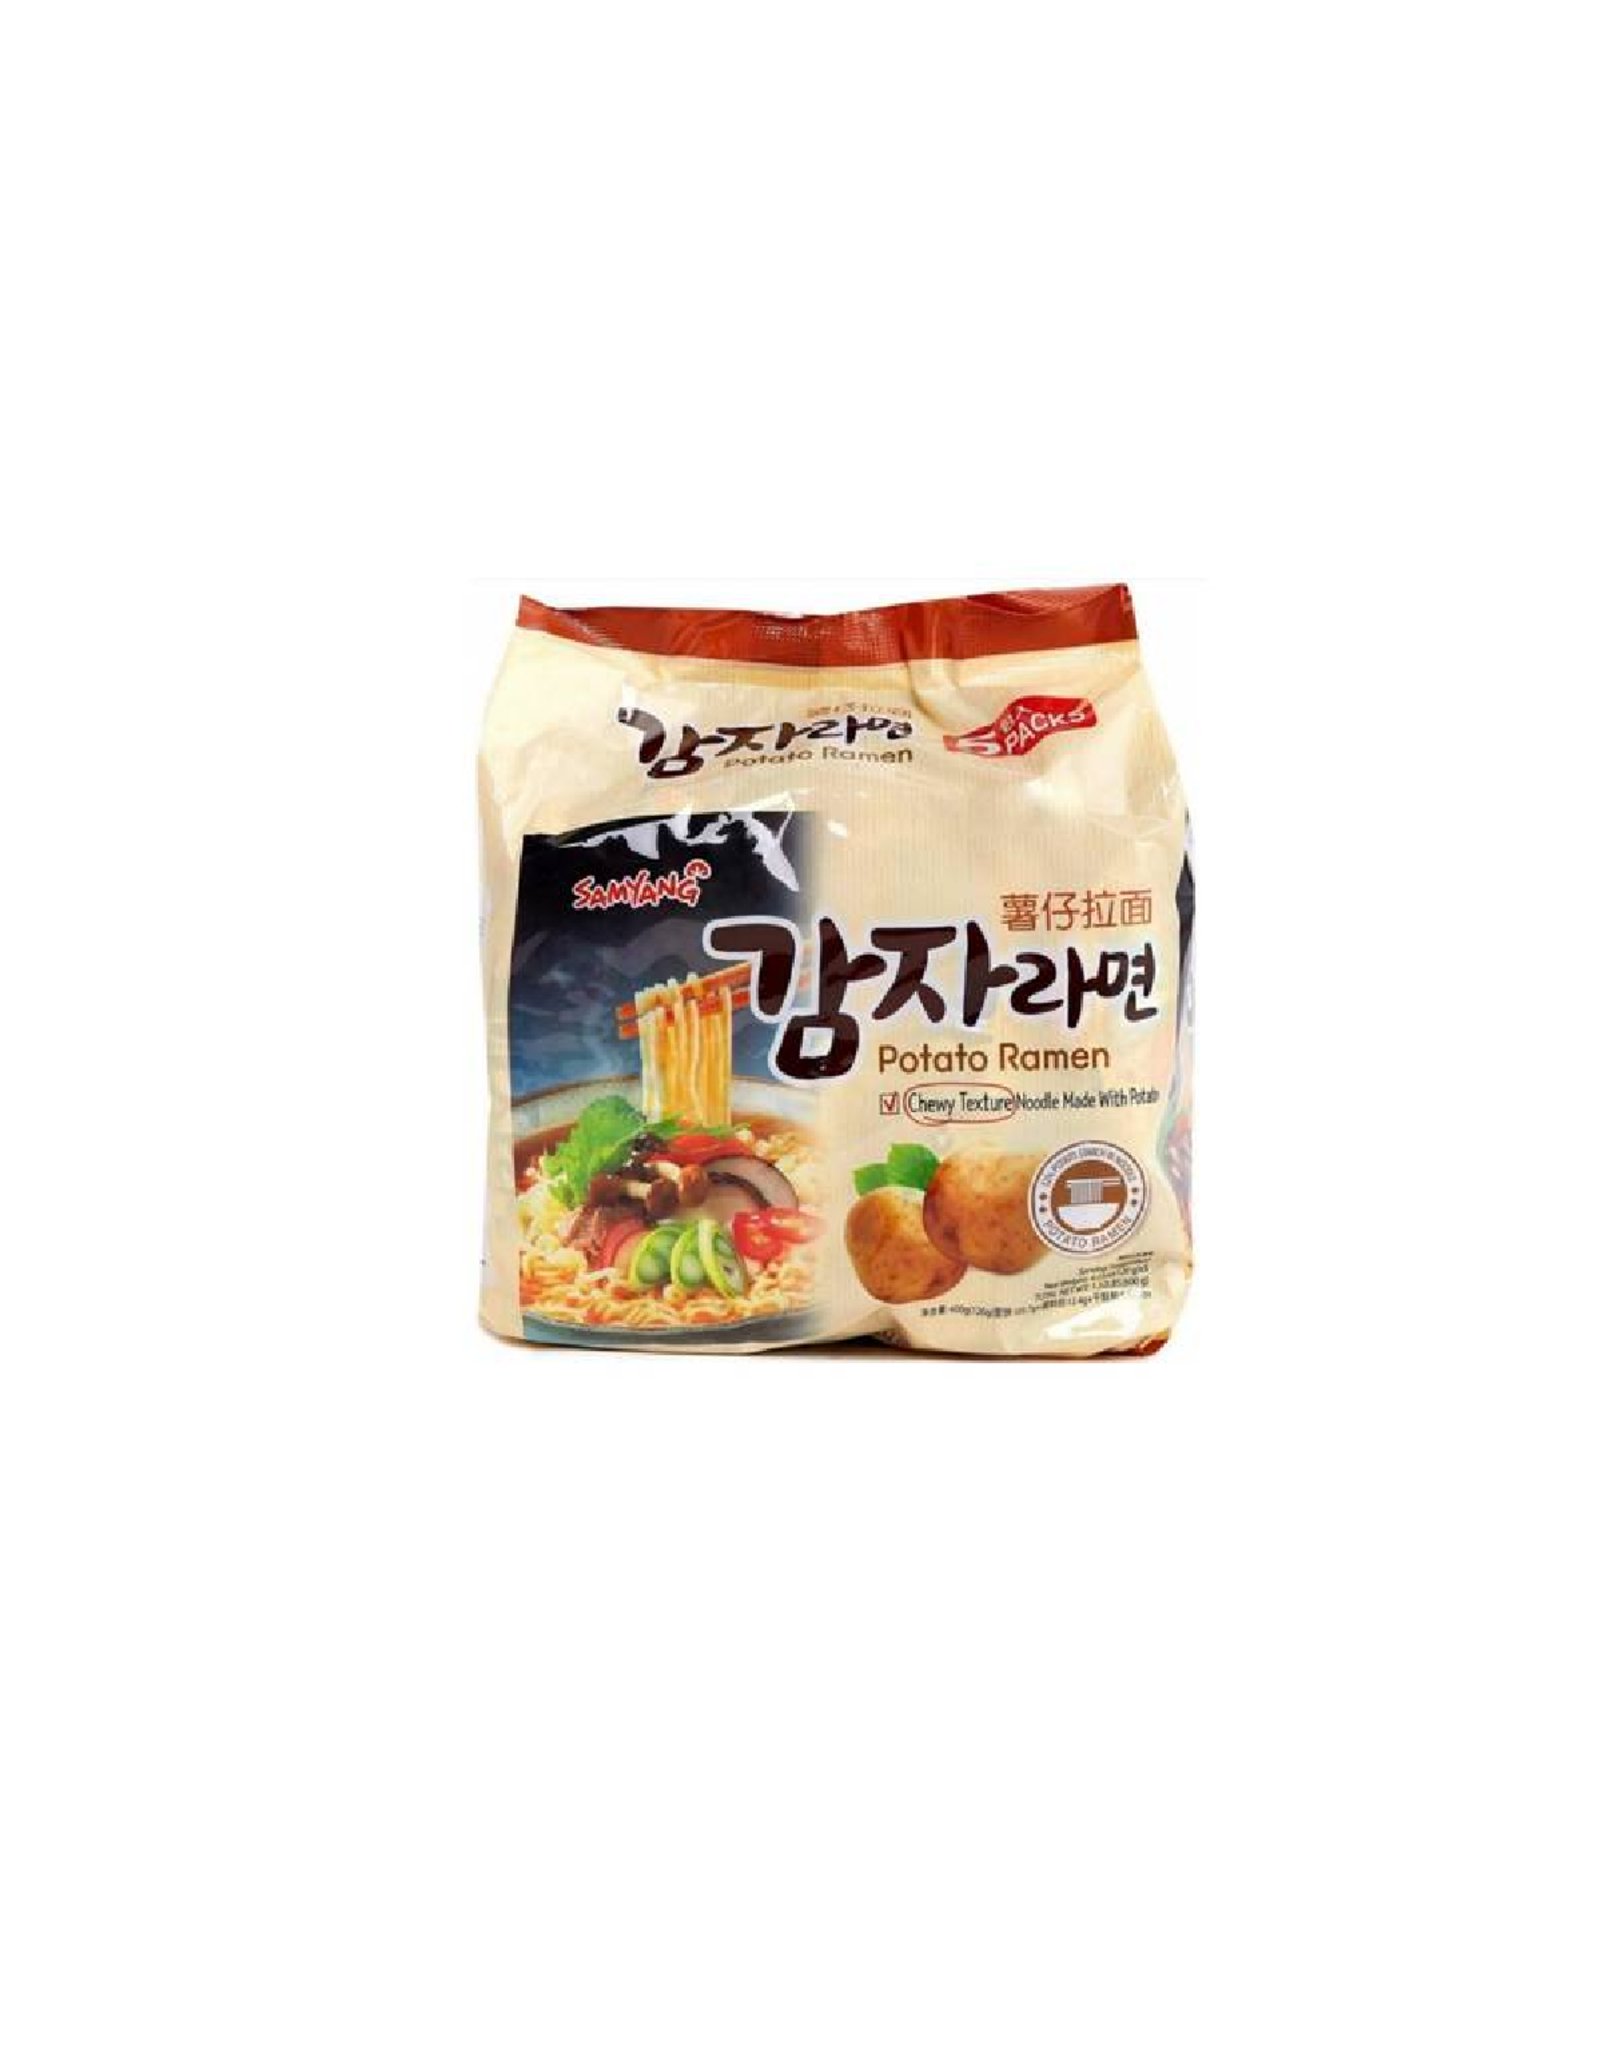 Samyang Potato Ramen 5-pack